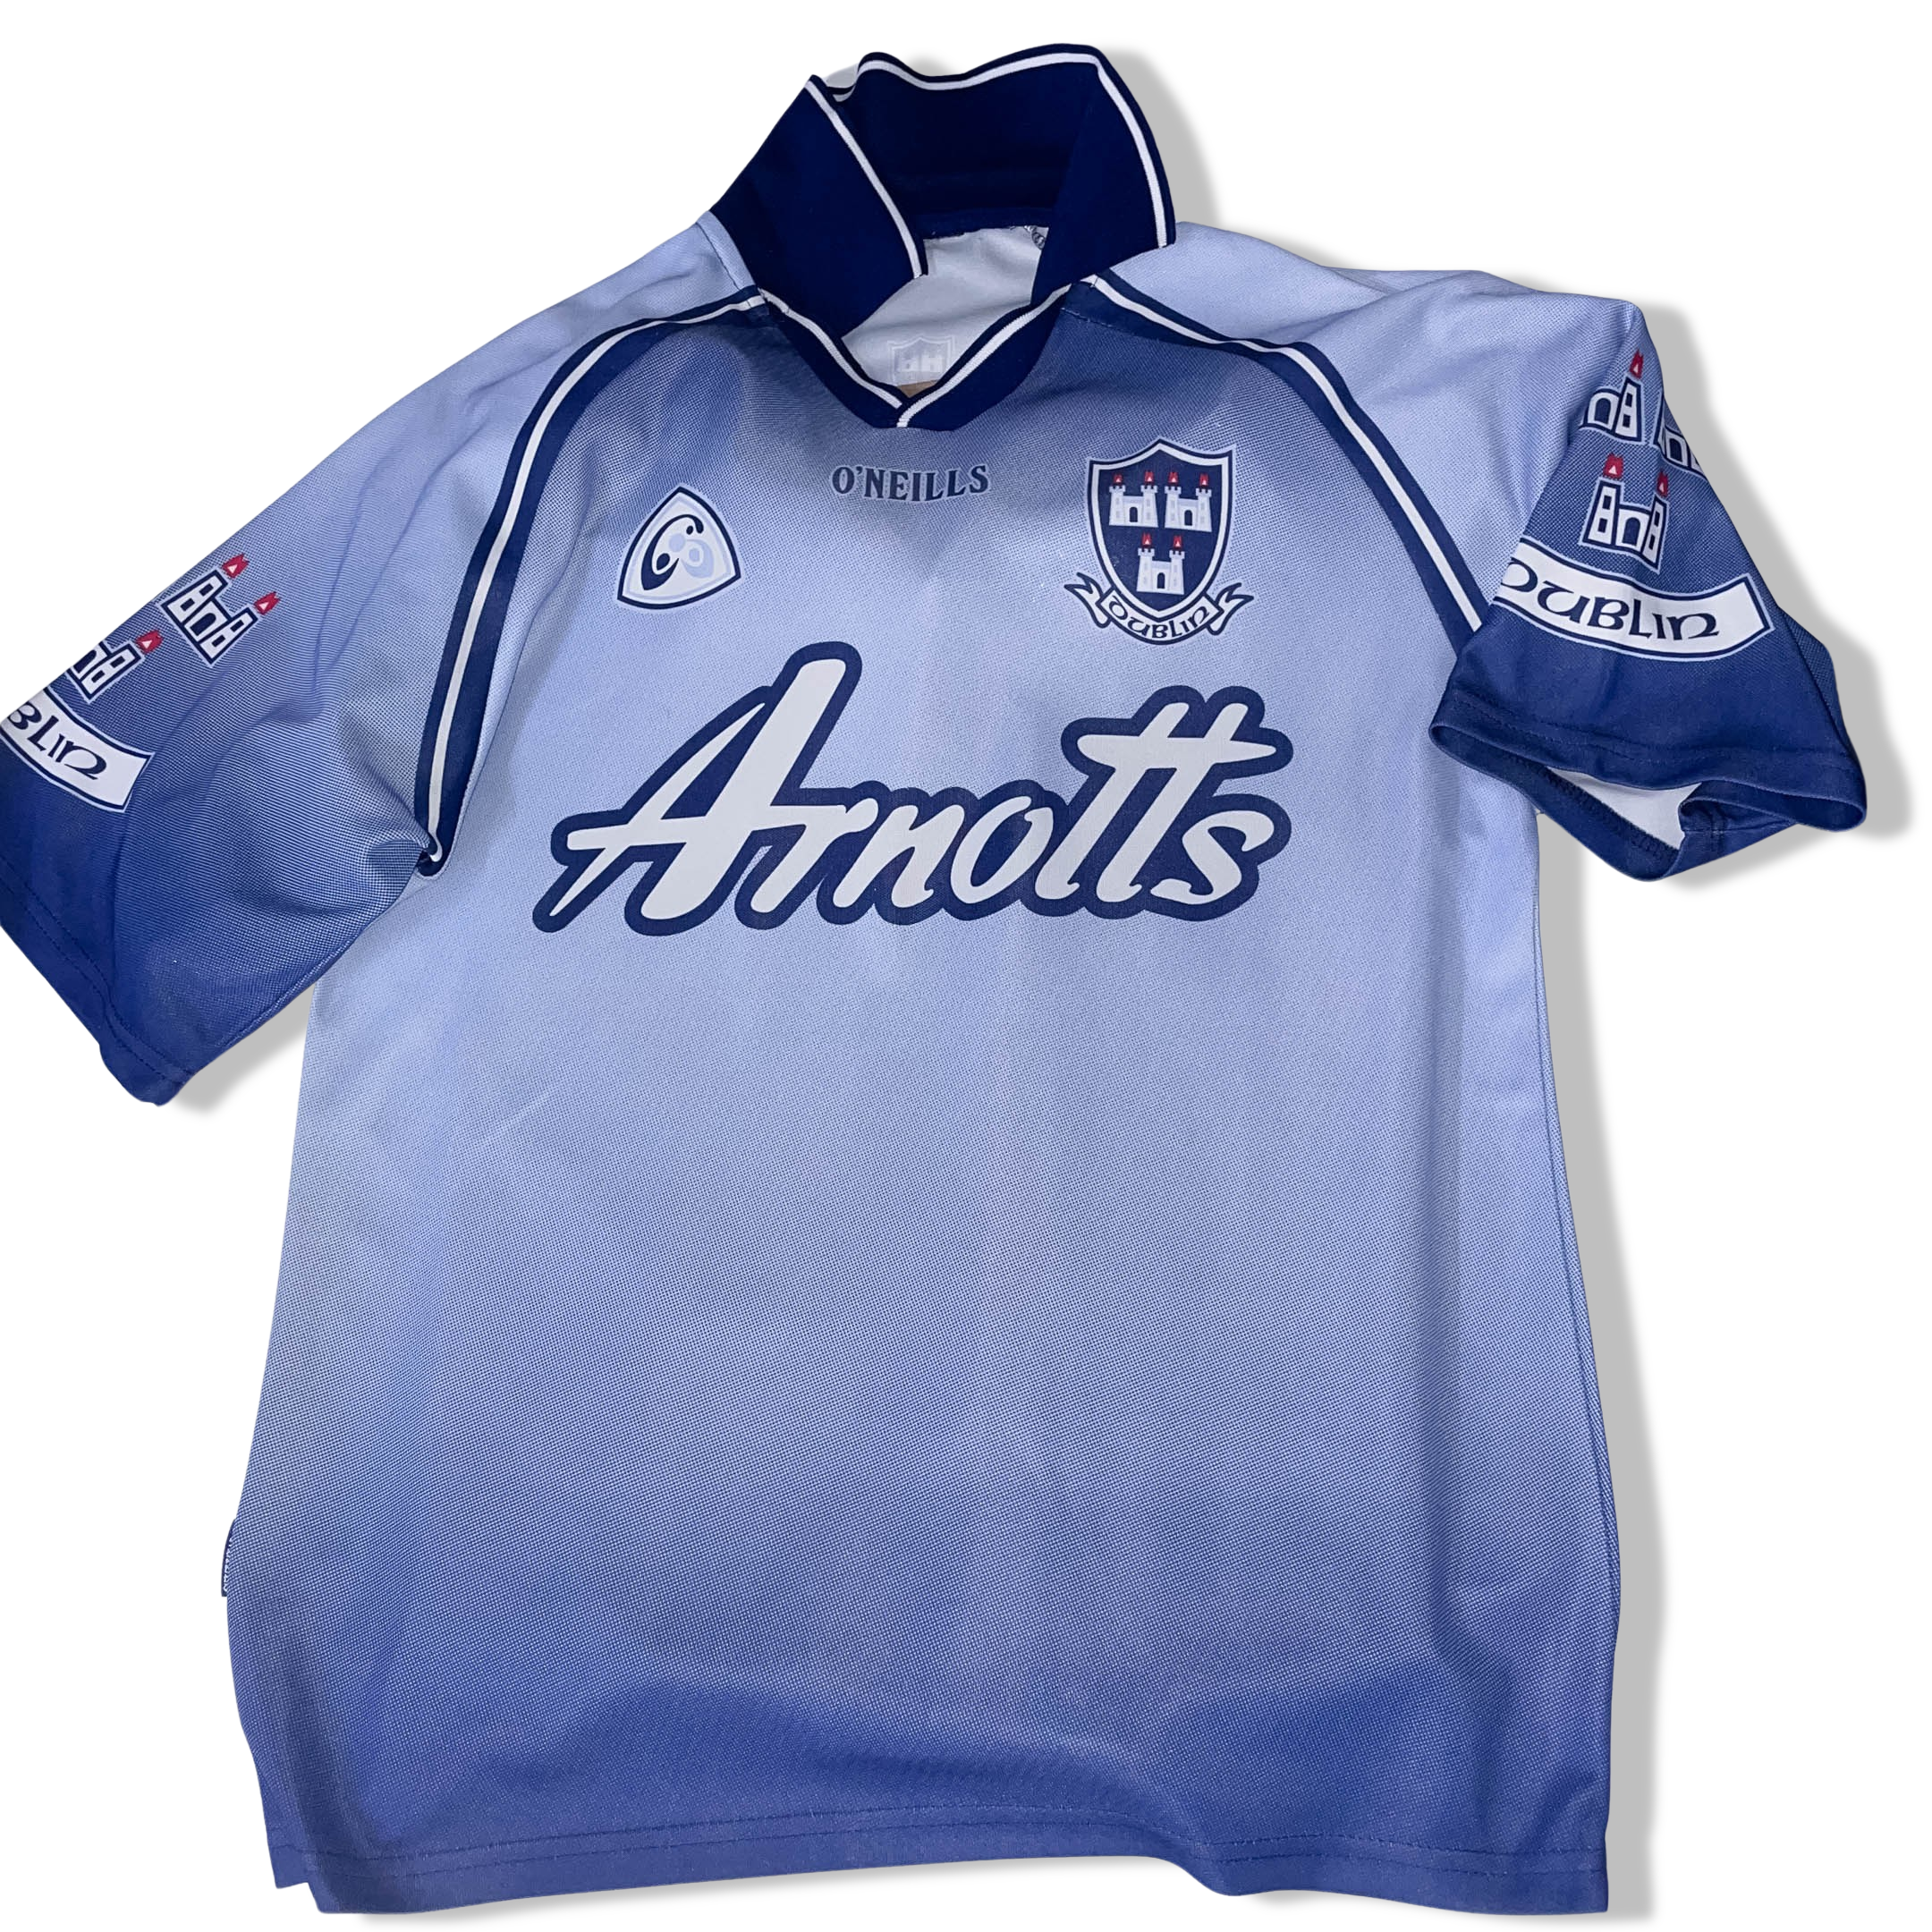 Vintage O'Neills Ath Cliath Dublin Arnotts Soccer/Football Jersey blue L/XL